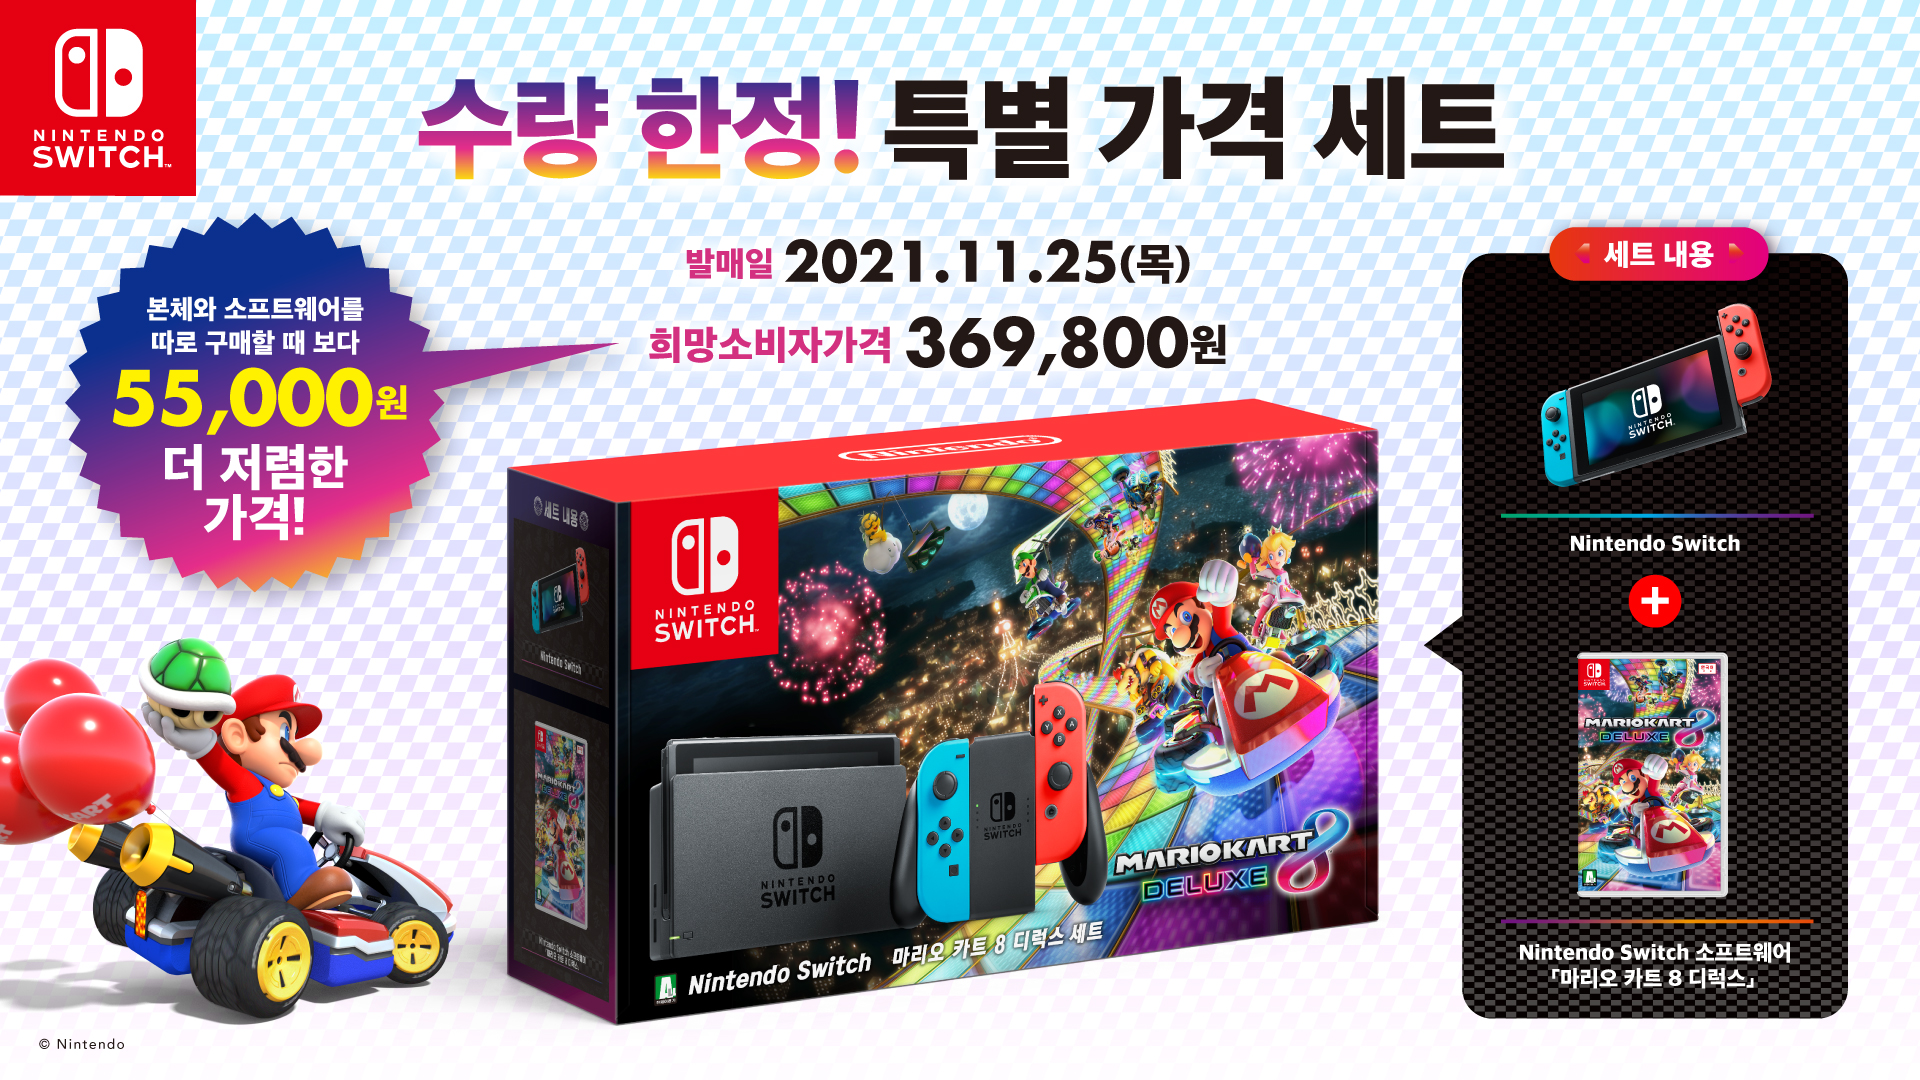 Nintendo Switch」本体と『マリオカート8 DX』のバンドルが韓国向け